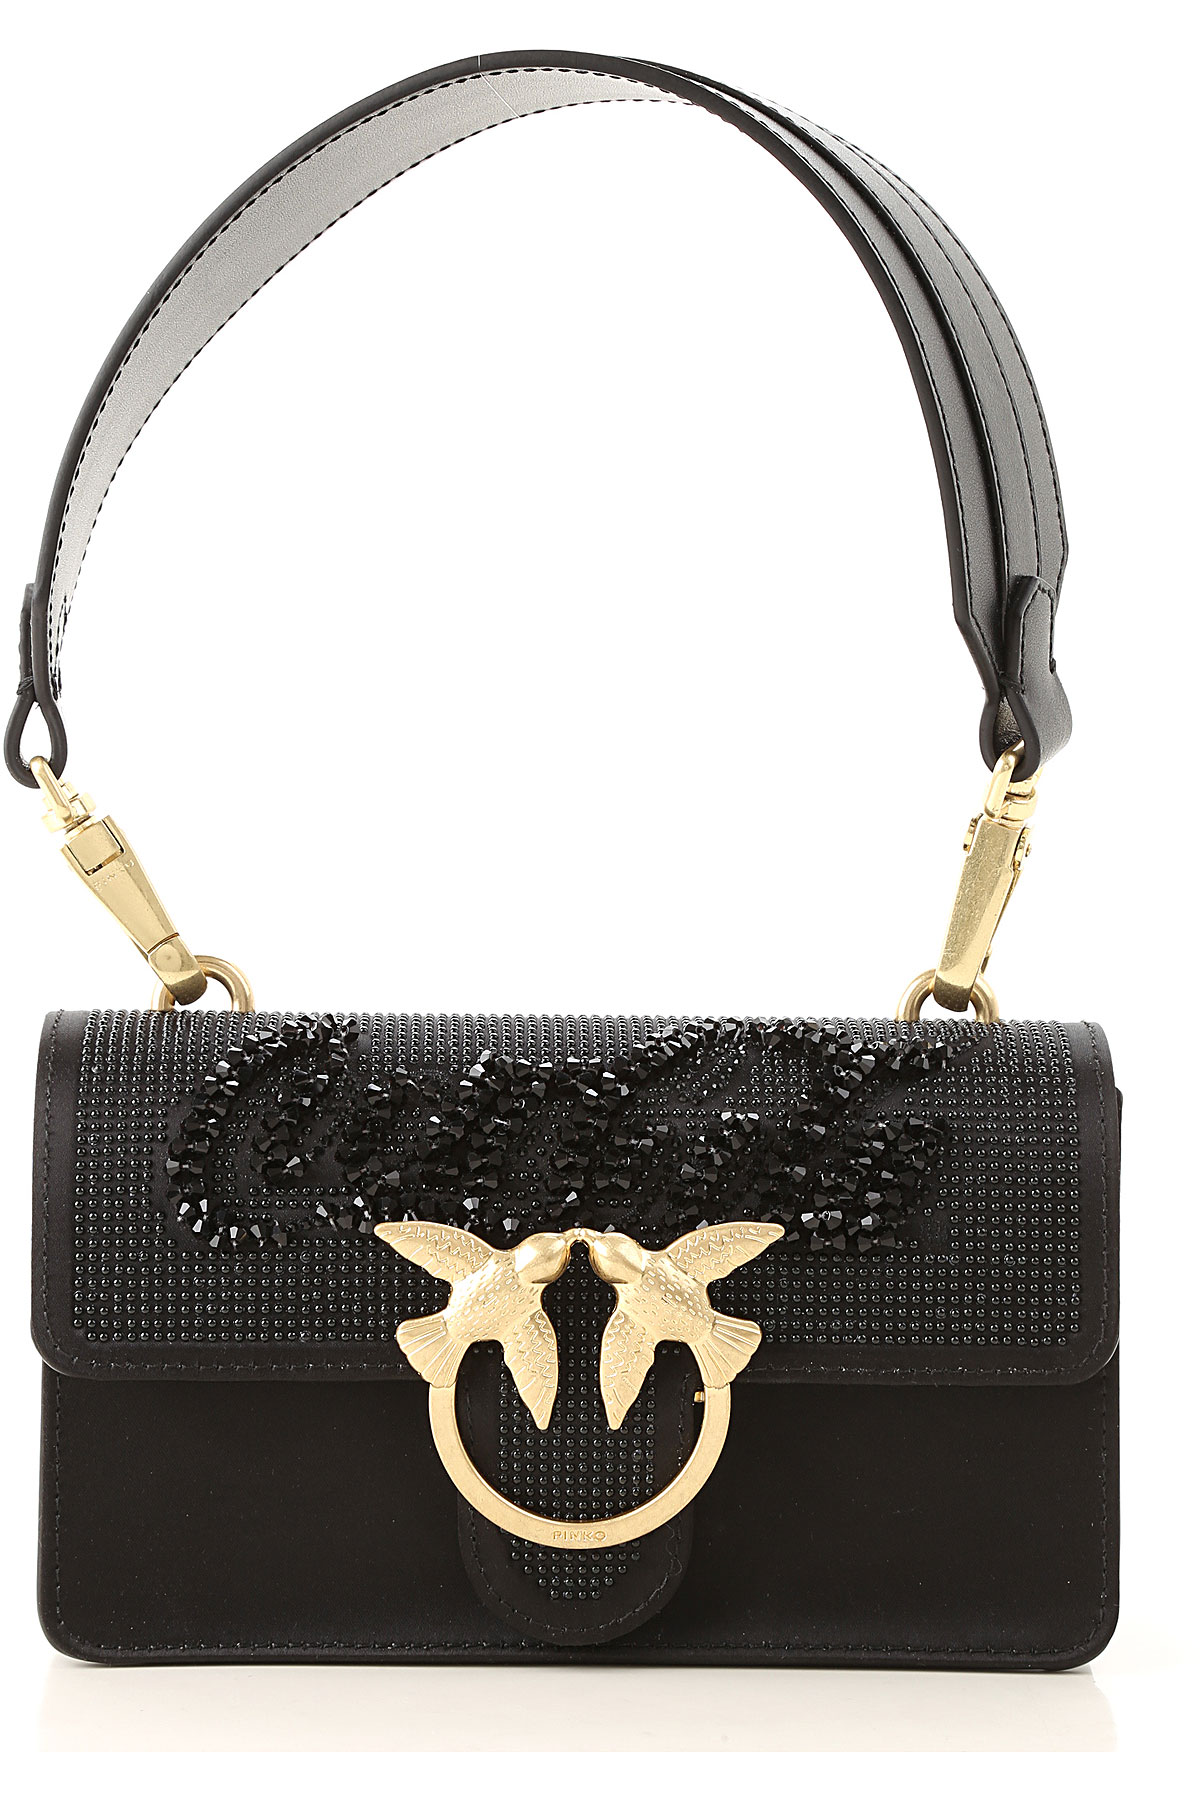 Handbags Pinko, Style code: 1p208u-y4k9-z99